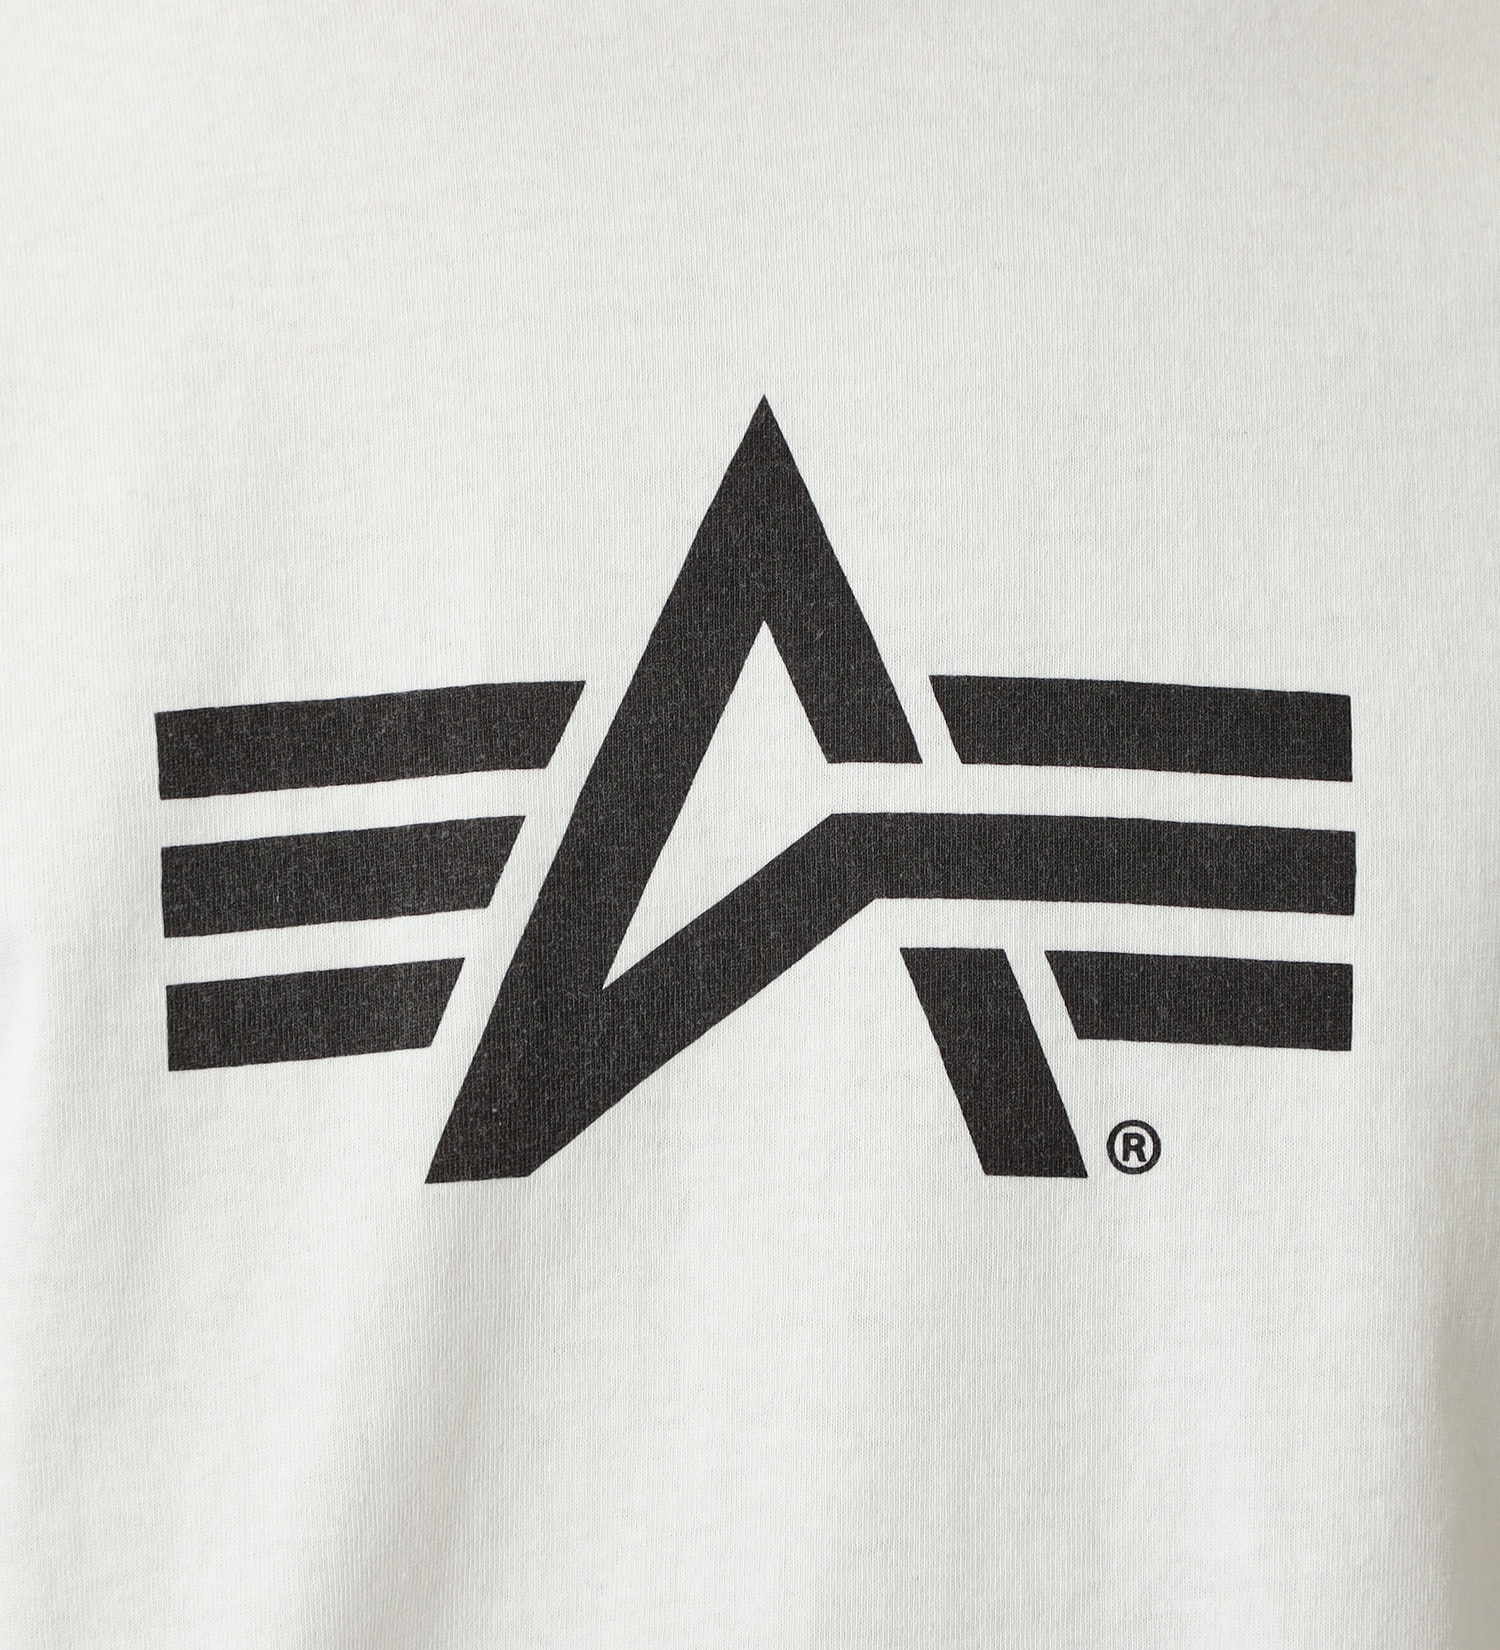 ALPHA(アルファ)の【GW SALE】【大きいサイズ】エアフォースマークプリント長袖Tシャツ|トップス/Tシャツ/カットソー/メンズ|ホワイト